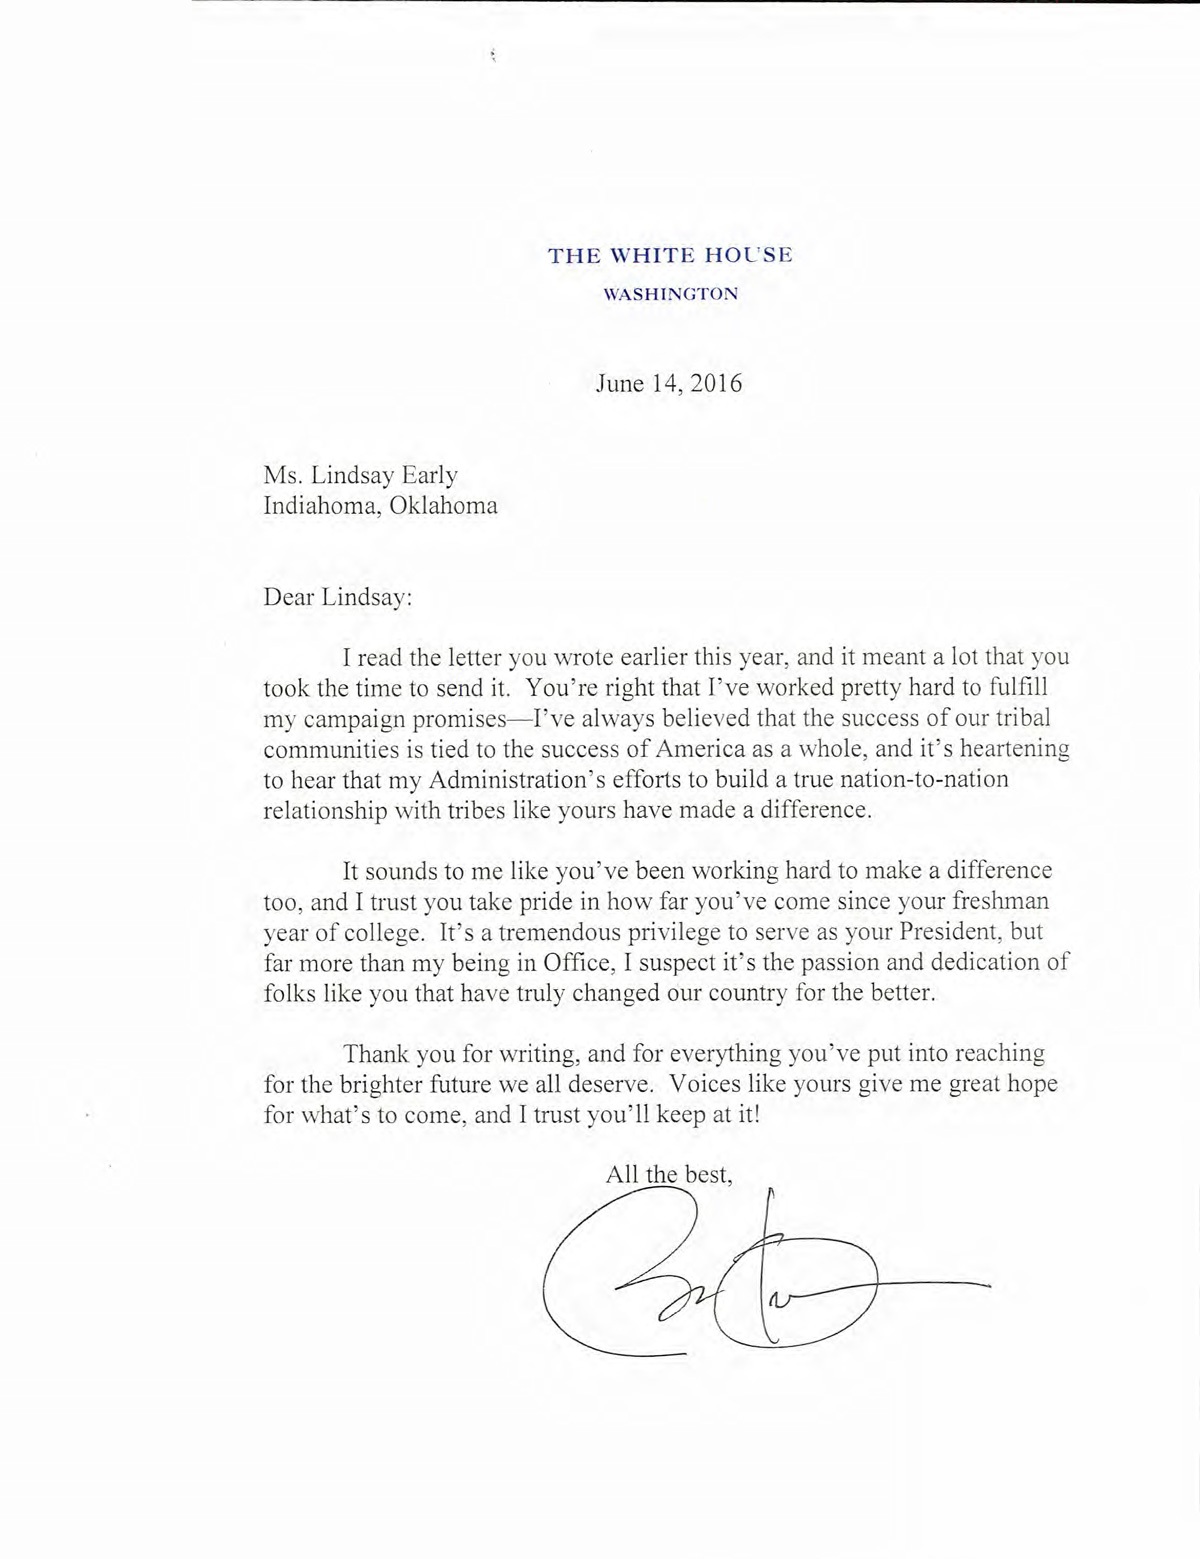 President Obama's response to Lindsay